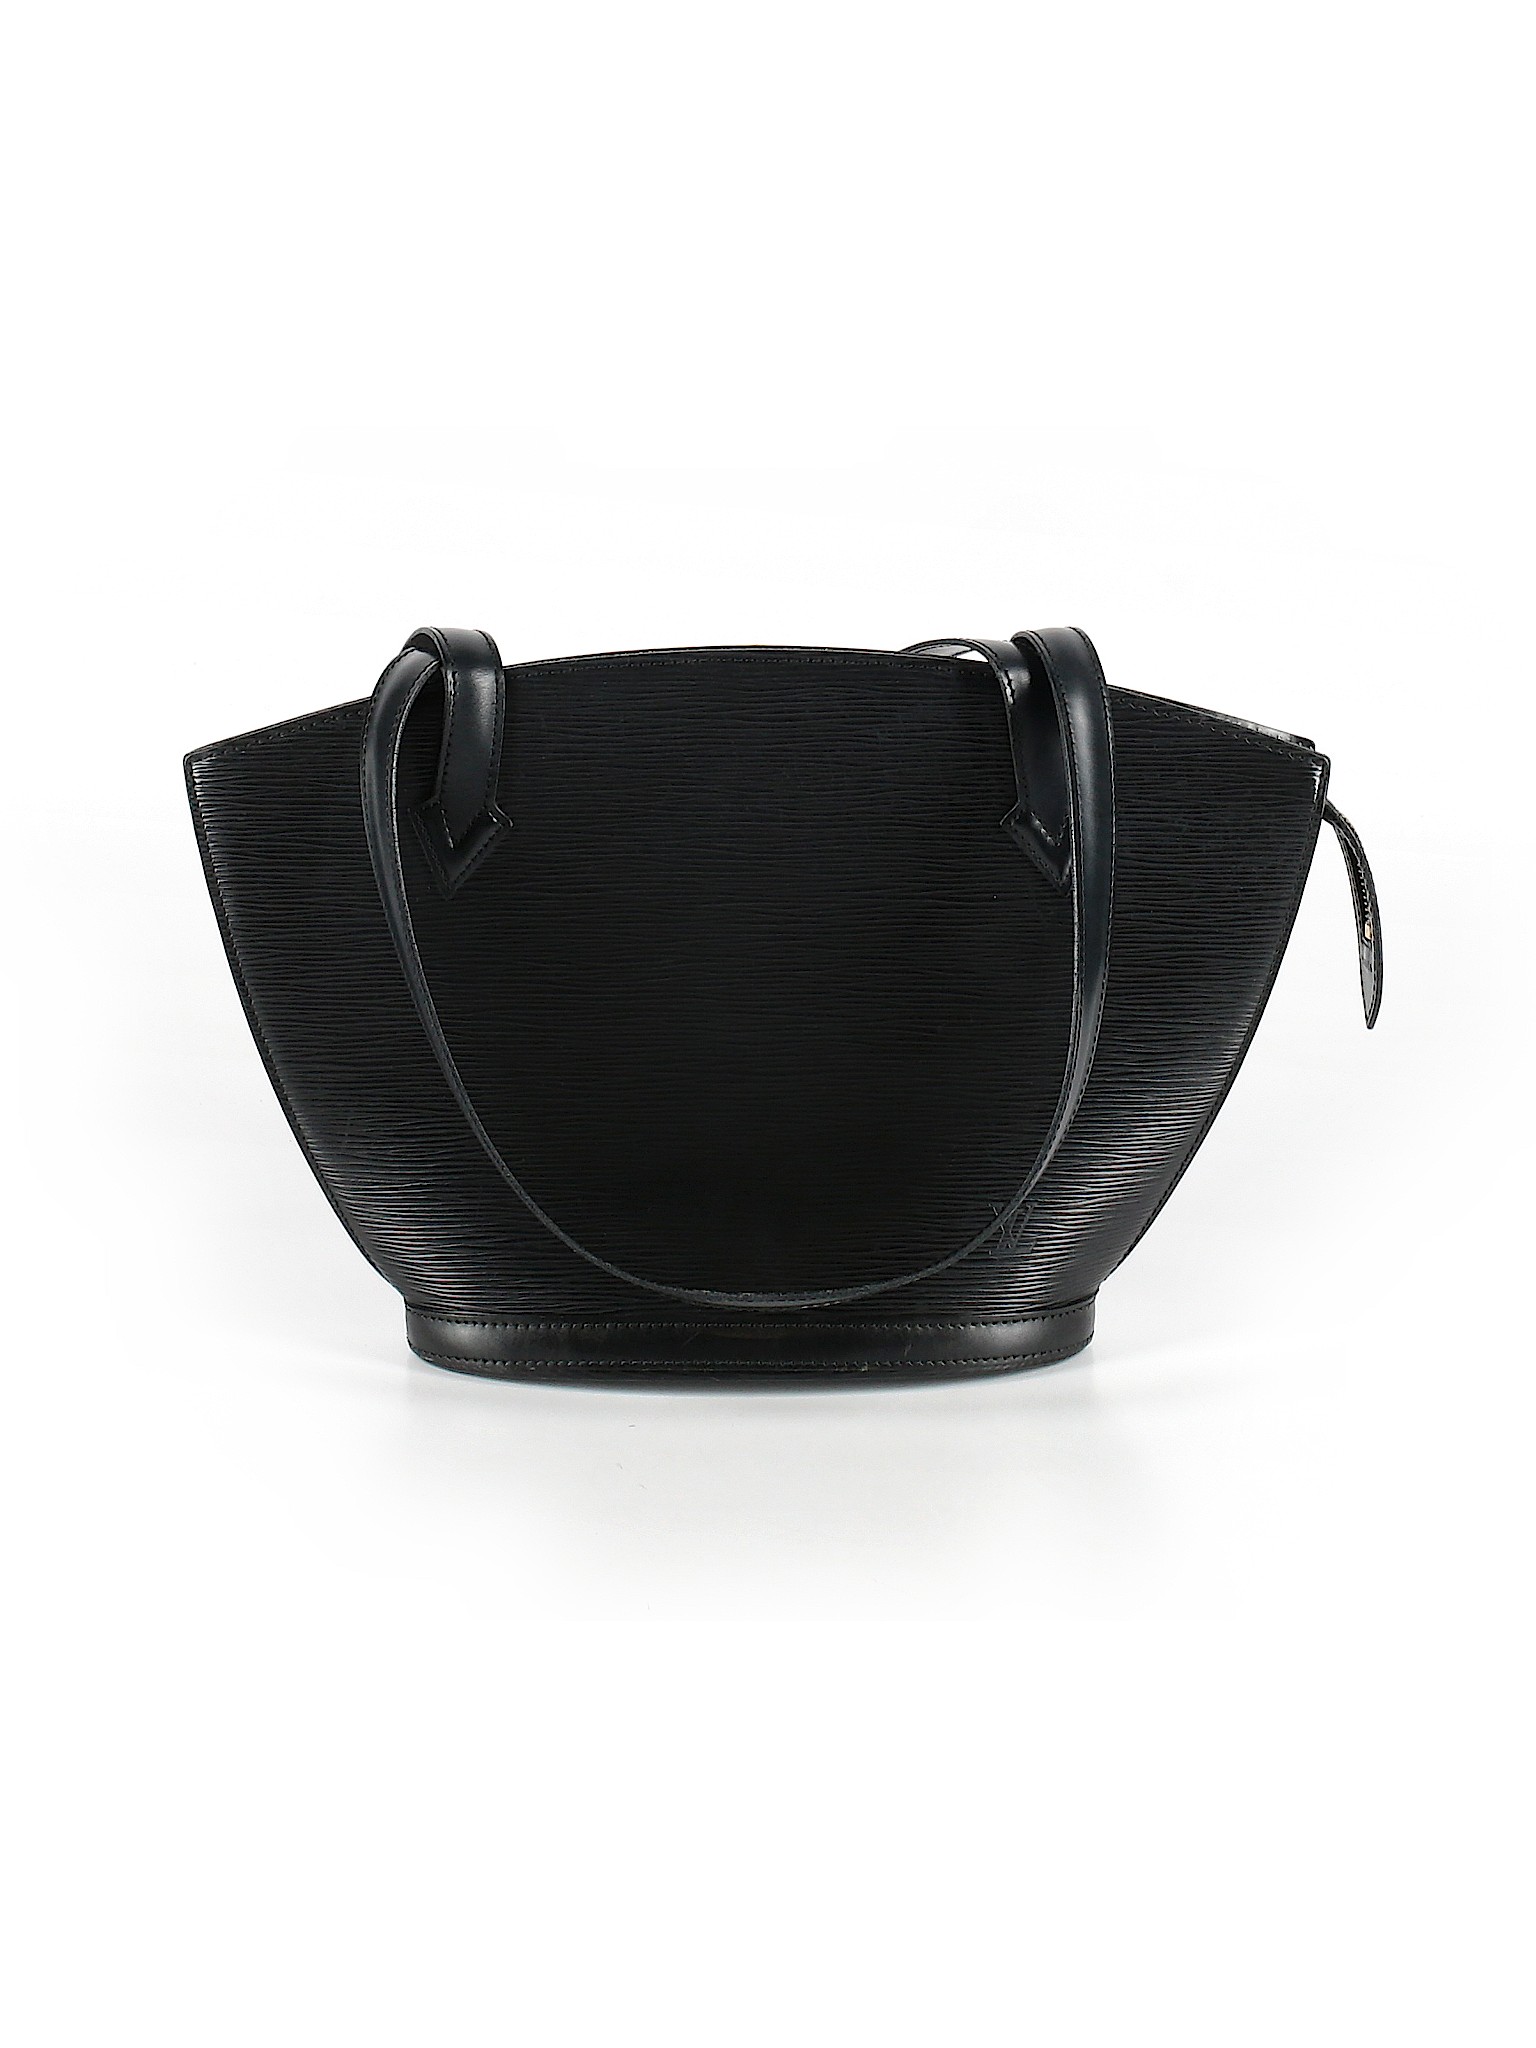 Louis Vuitton 100% Leather Solid Black Leather Shoulder Bag One Size - 69% off | thredUP